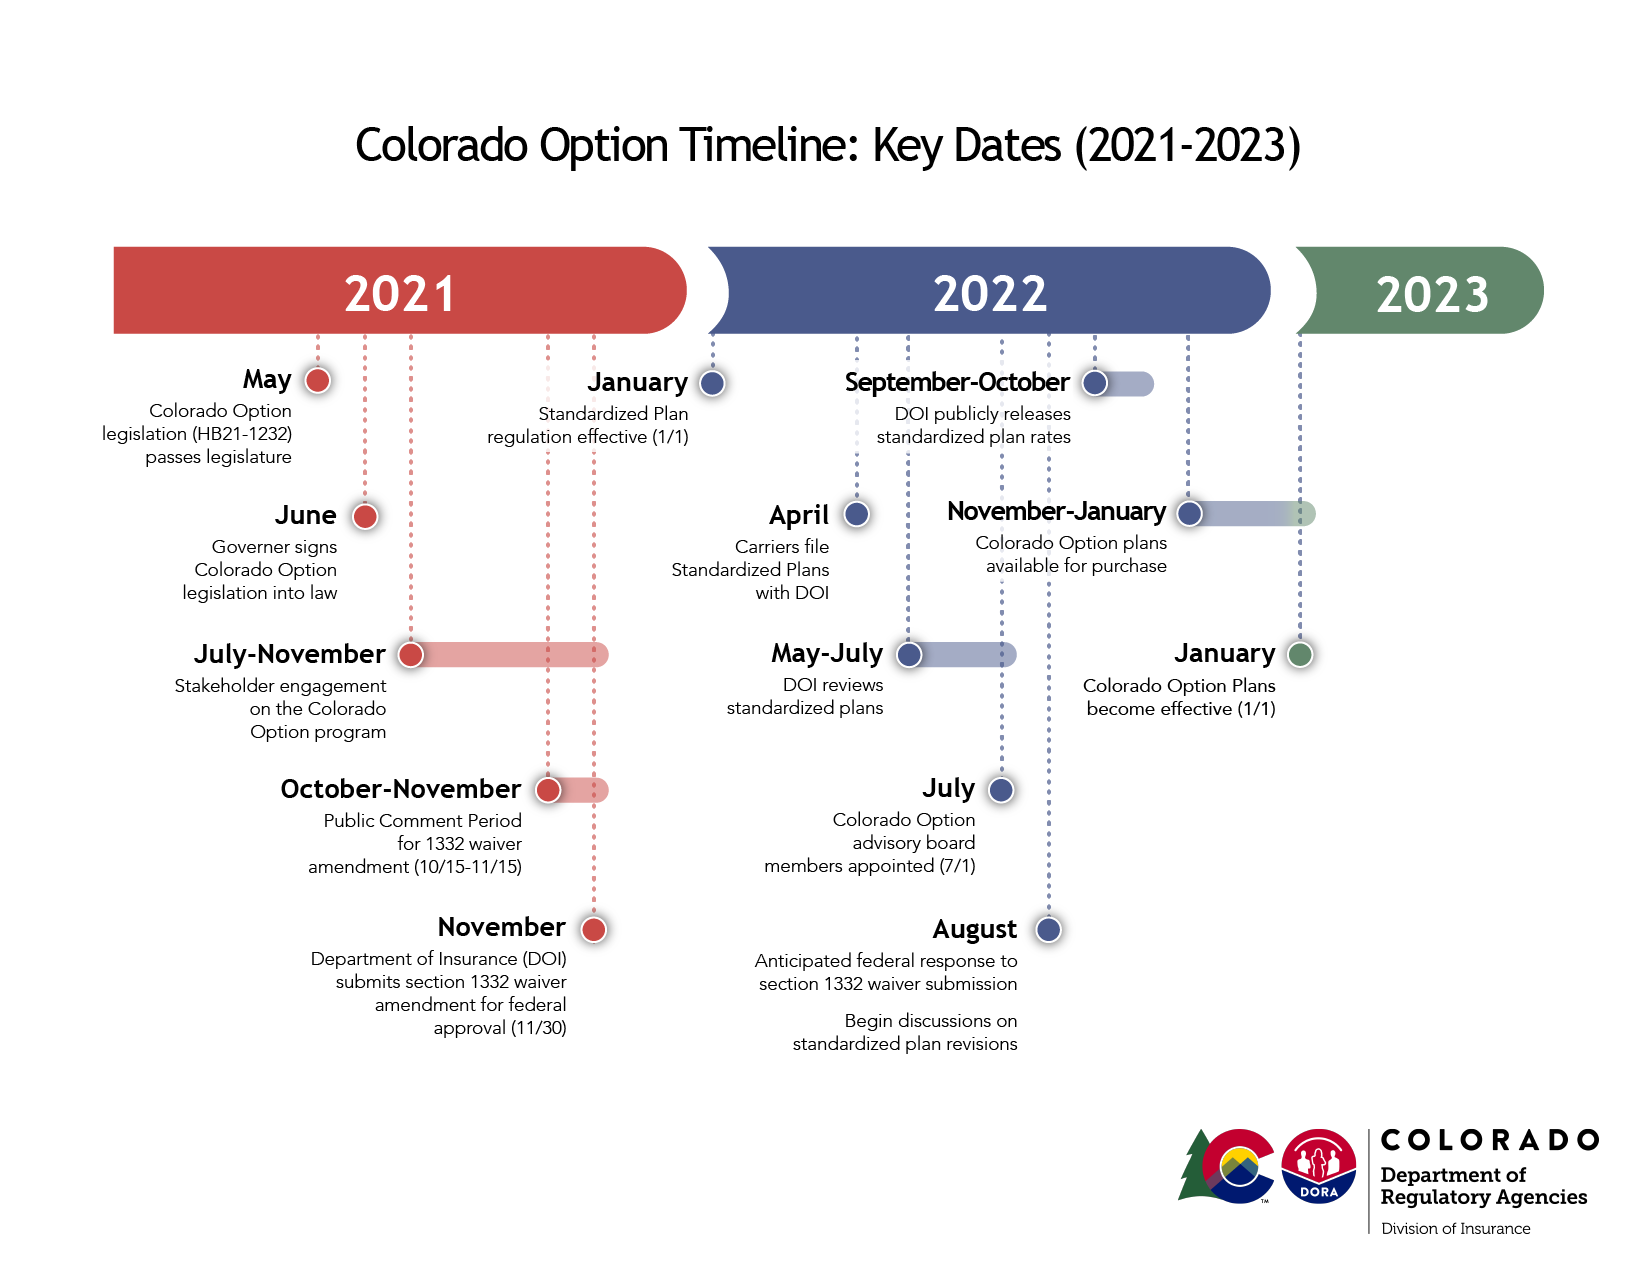 Colorado Option Timeline - Key Dates 2021-2023